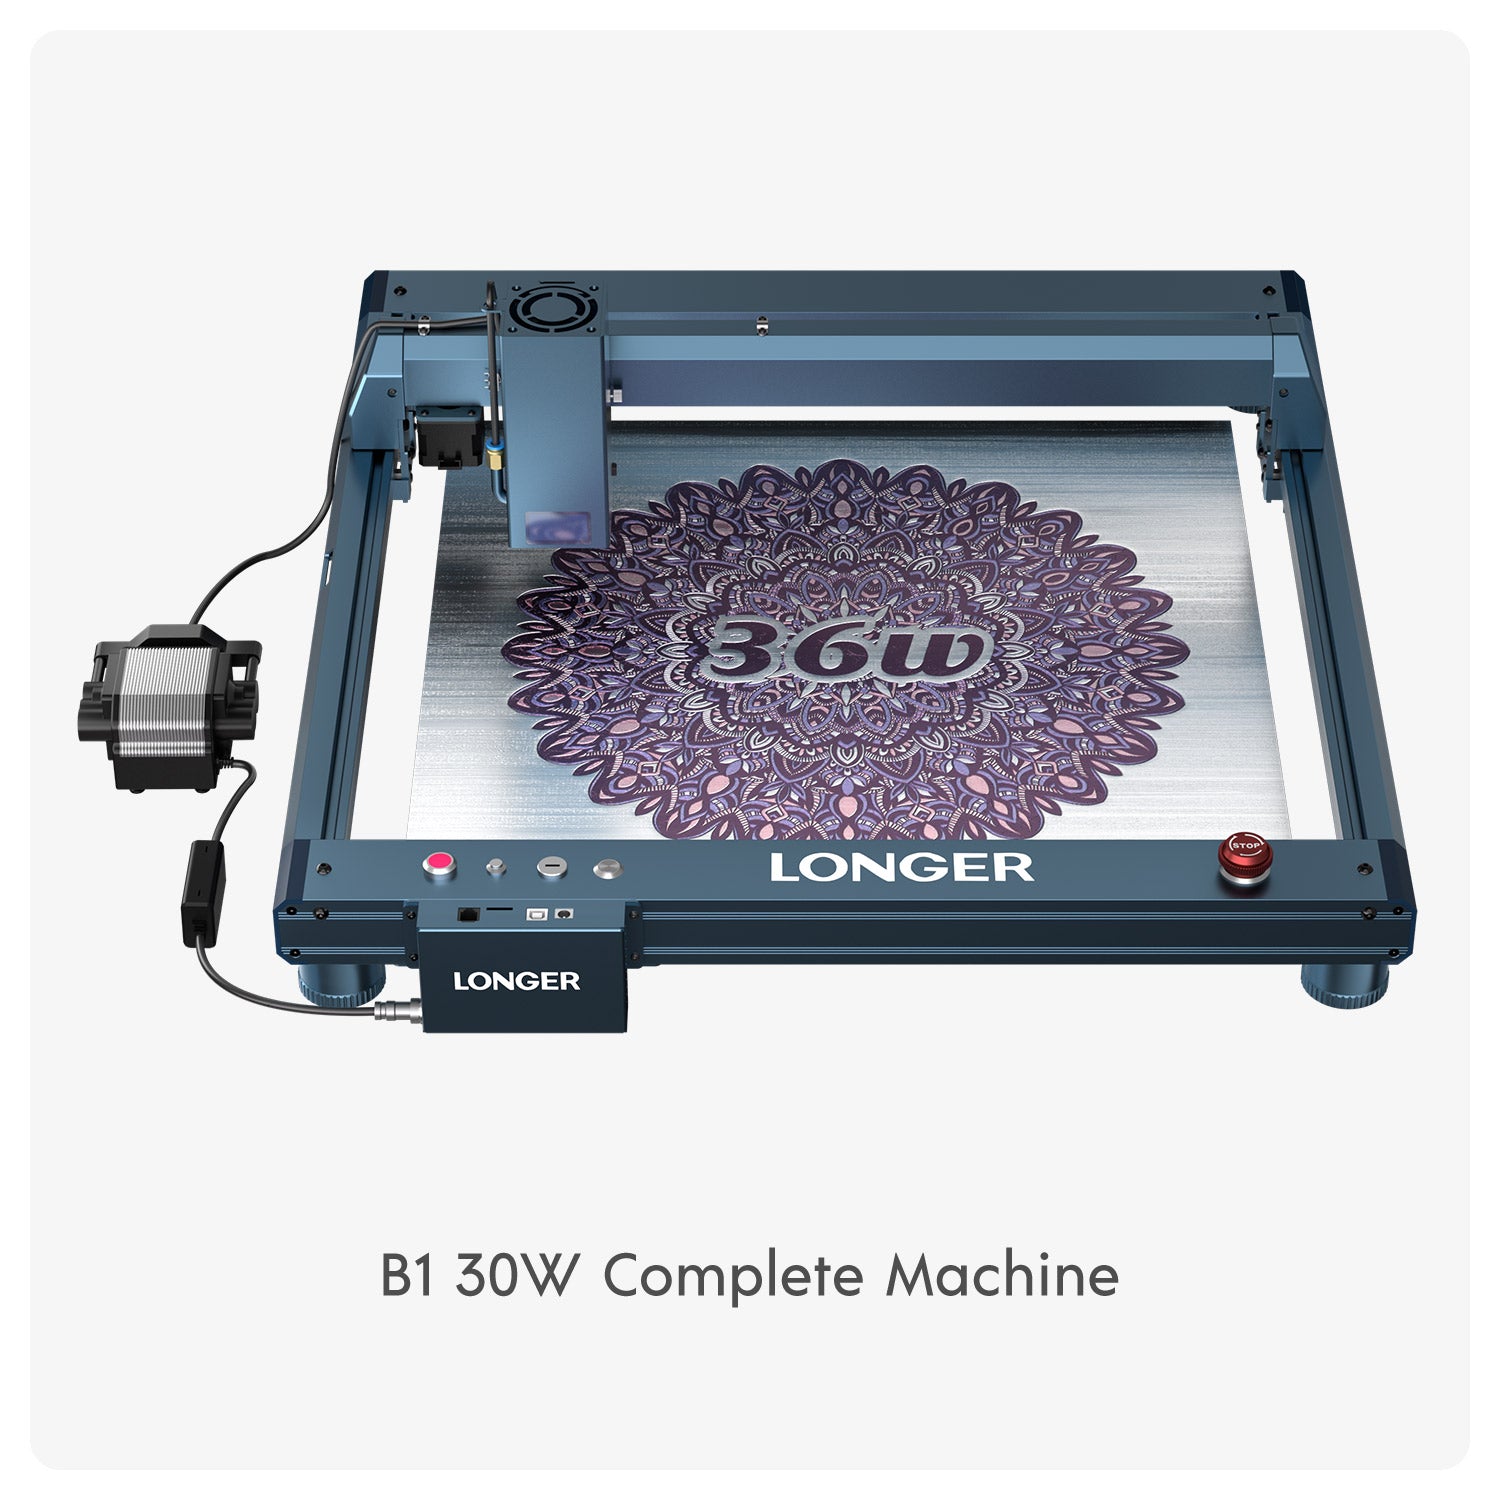 Longer Laser B1 30W Engraving Machine(33-36W Output Power)